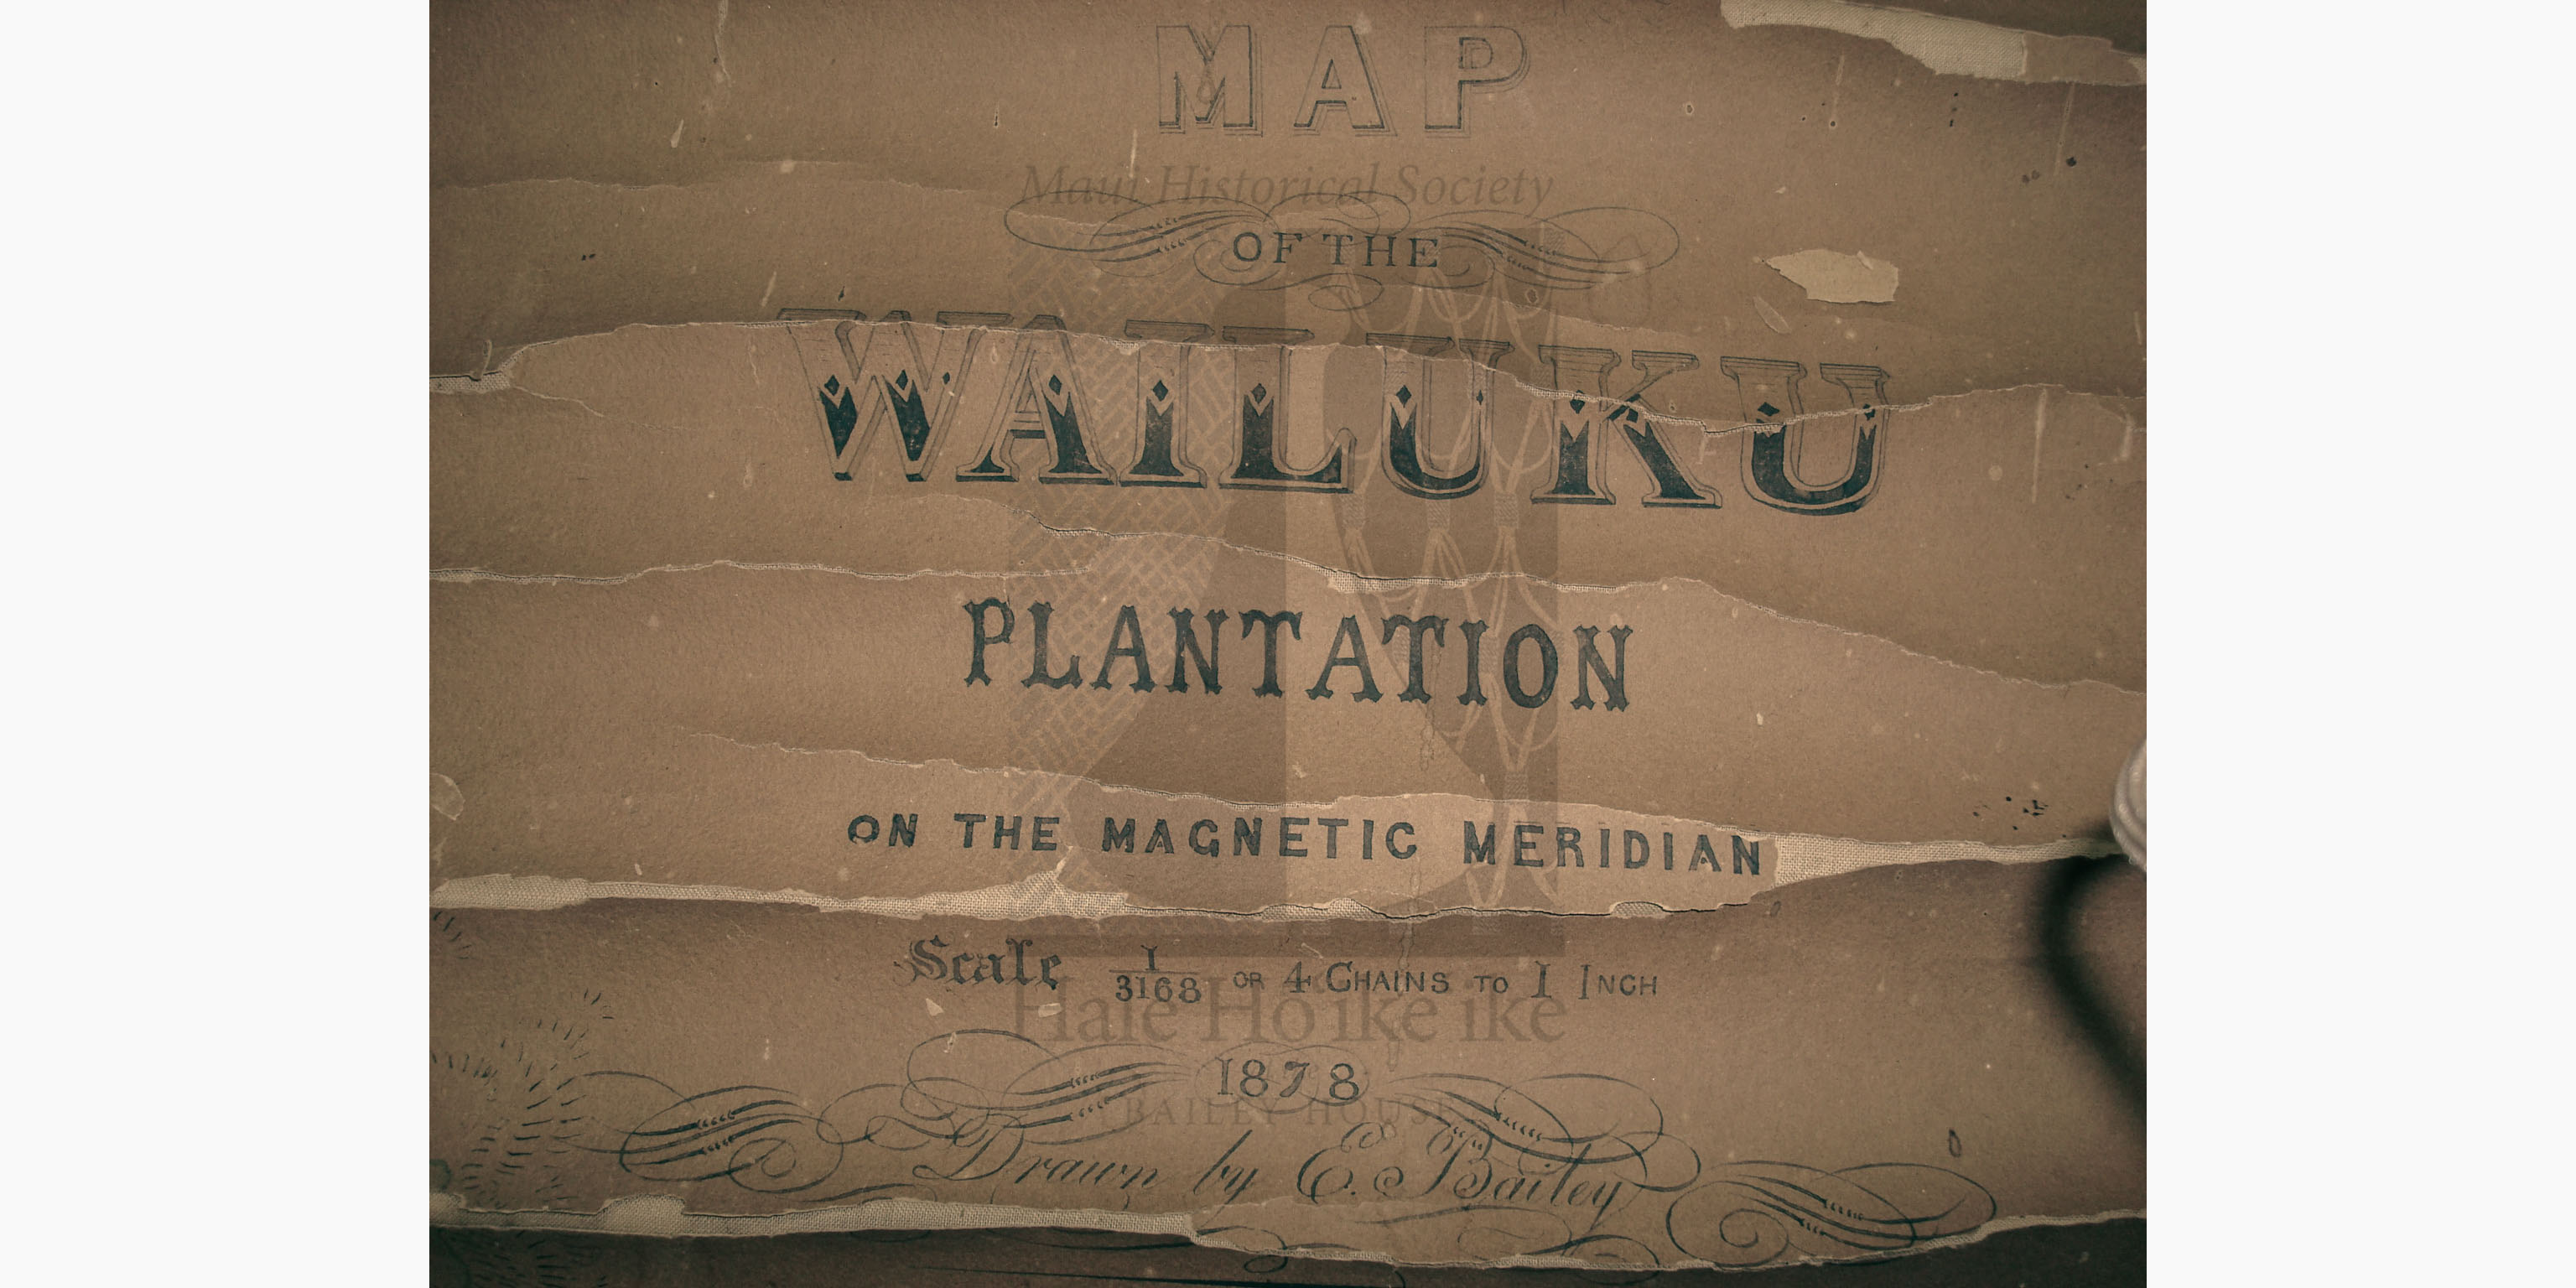 William Bailey sells home to Wailuku Plantation